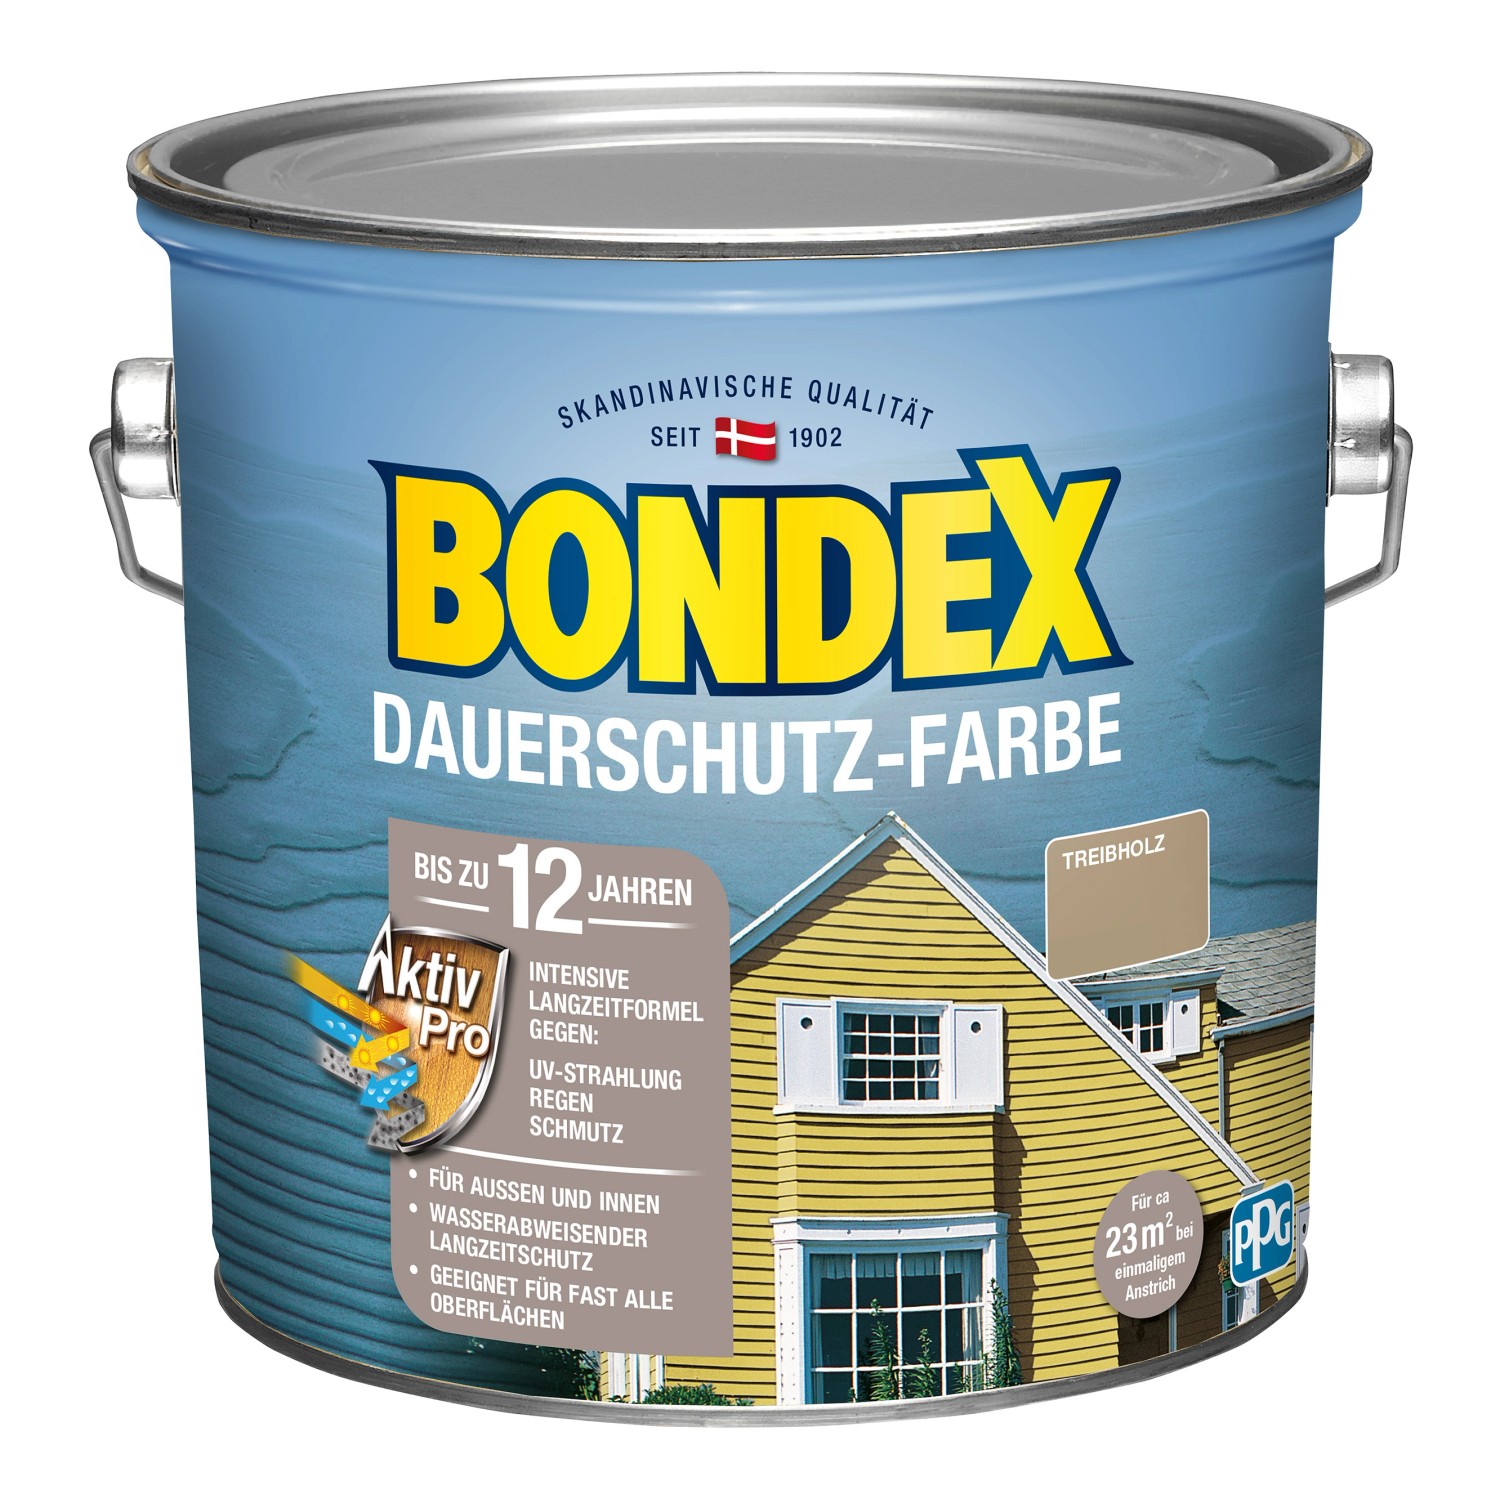 Bondex Dauerschutz-Farbe Treibholz seidenglänzend 2,5 l